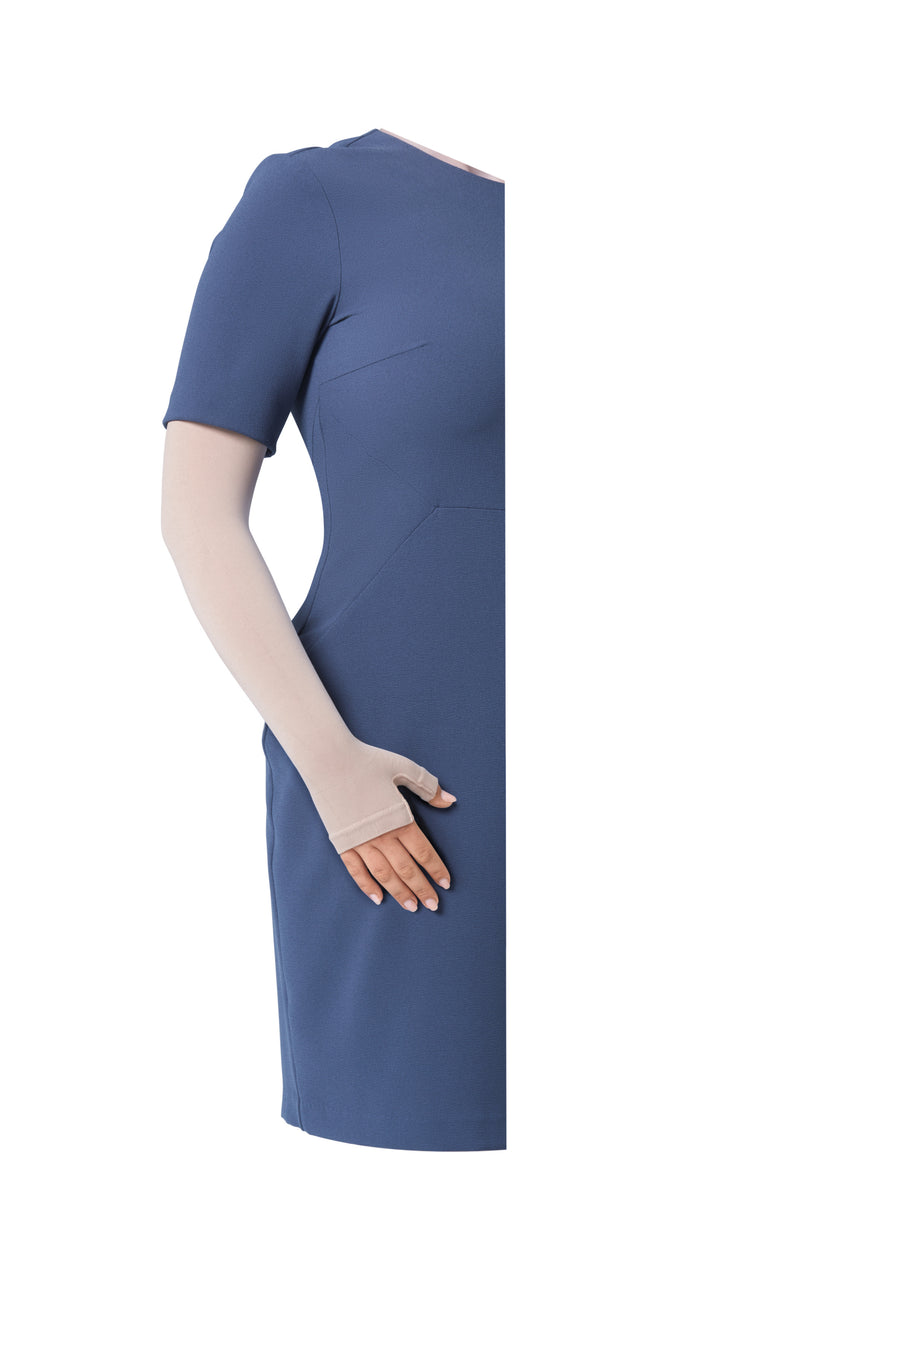 JOBST® Bella Lite Unisex Arm Sleeve - Medical Compression Garments Australia